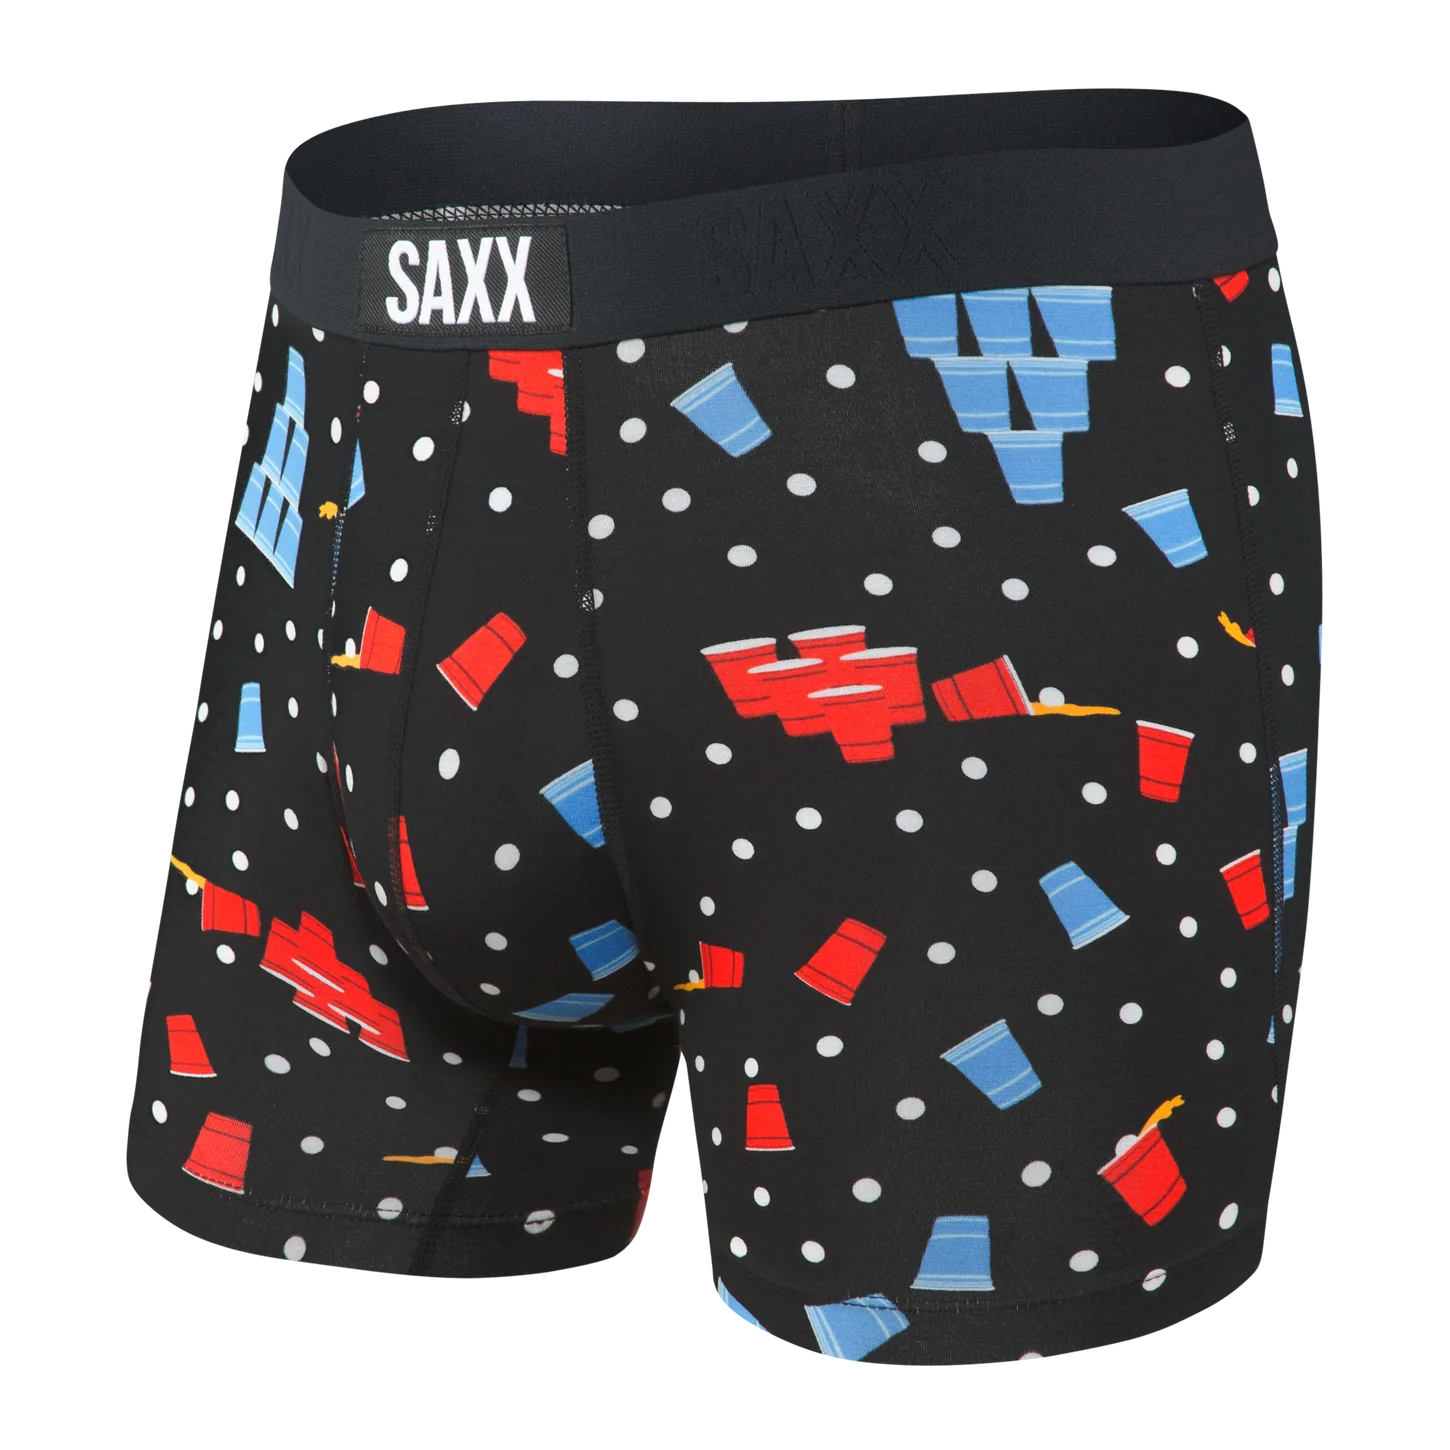 SAXX Men's Vibe Boxer Brief - Friday Night Camo